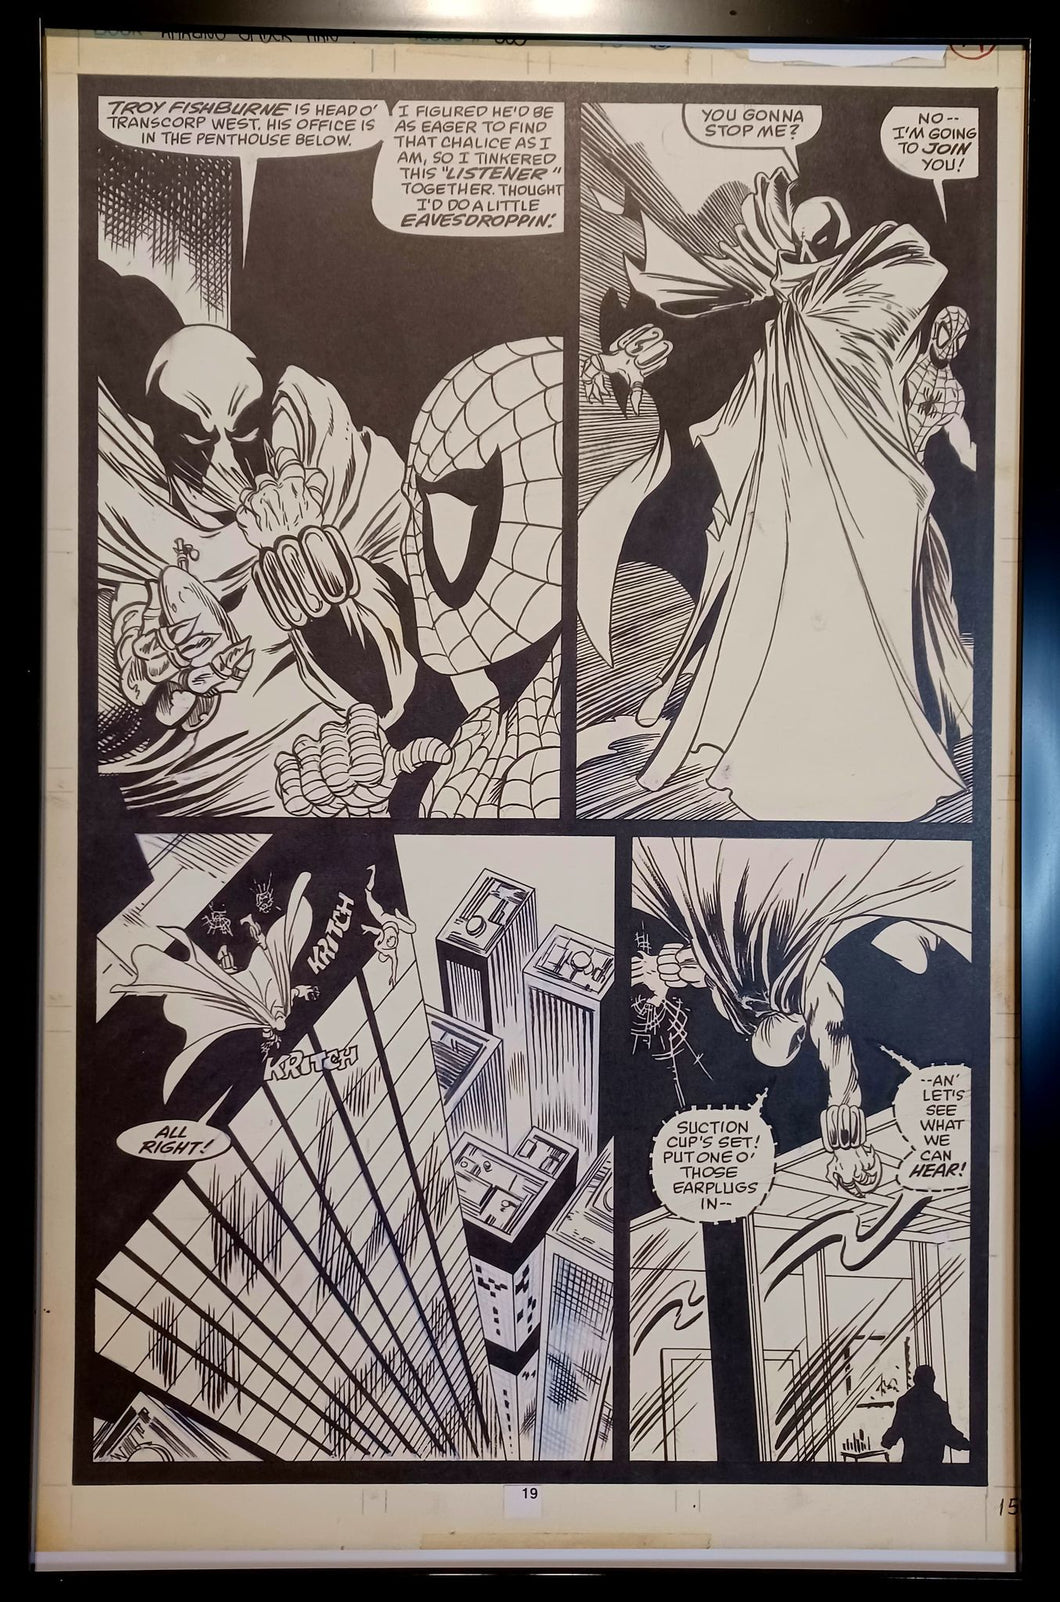 Amazing Spider-Man #305 pg. 15 by Todd McFarlane 11x17 FRAMED Original Art Print Comic Poster